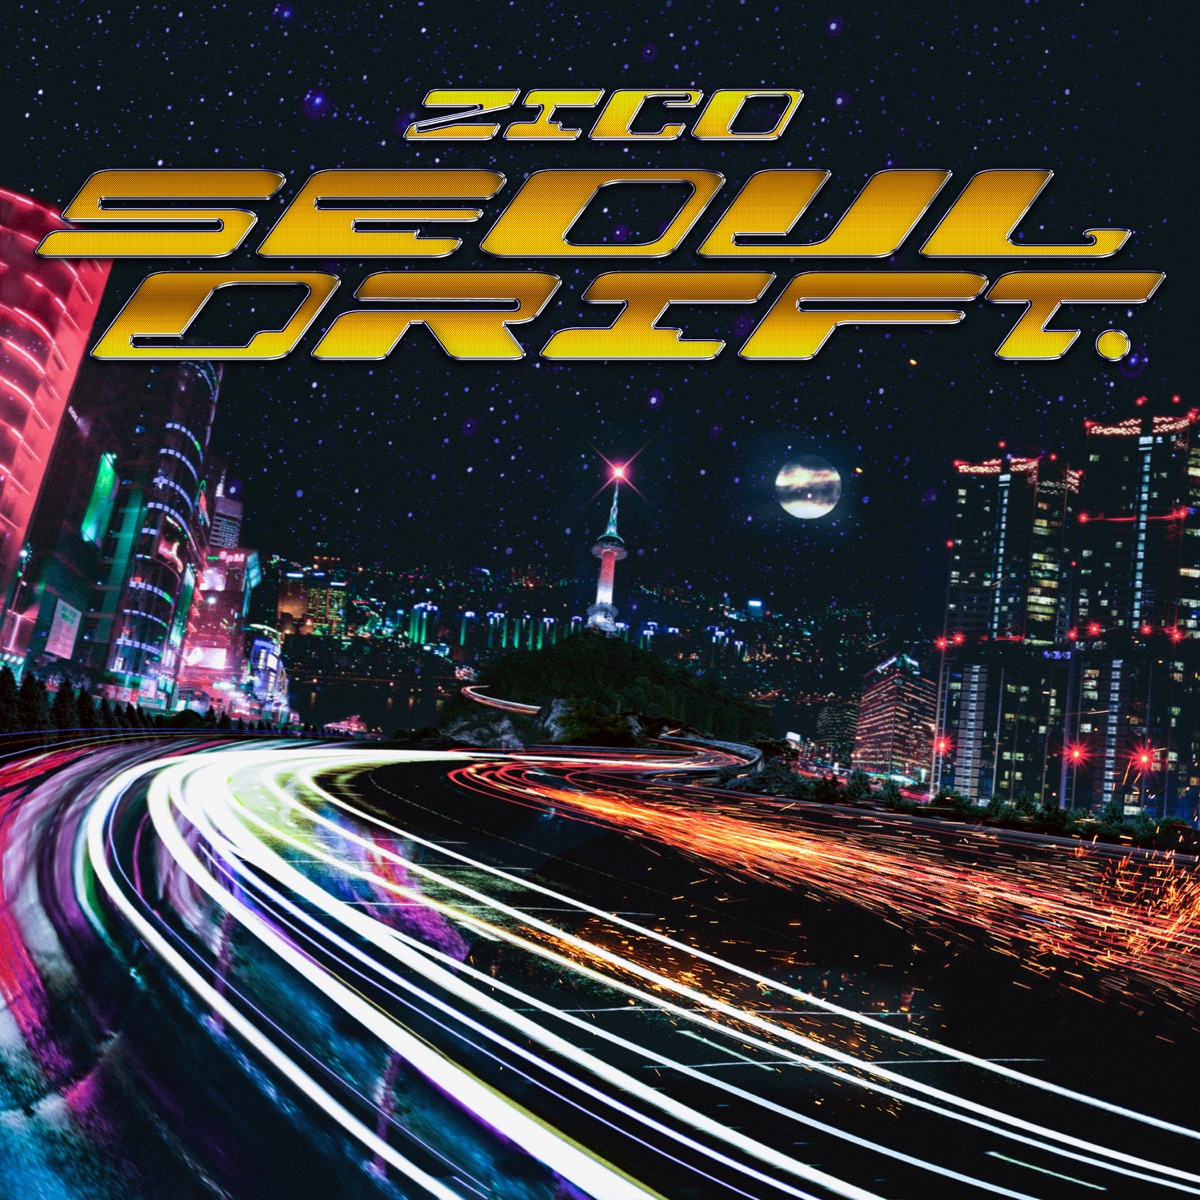 Cover art for『ZICO - SEOUL DRIFT』from the release『SEOUL DRIFT